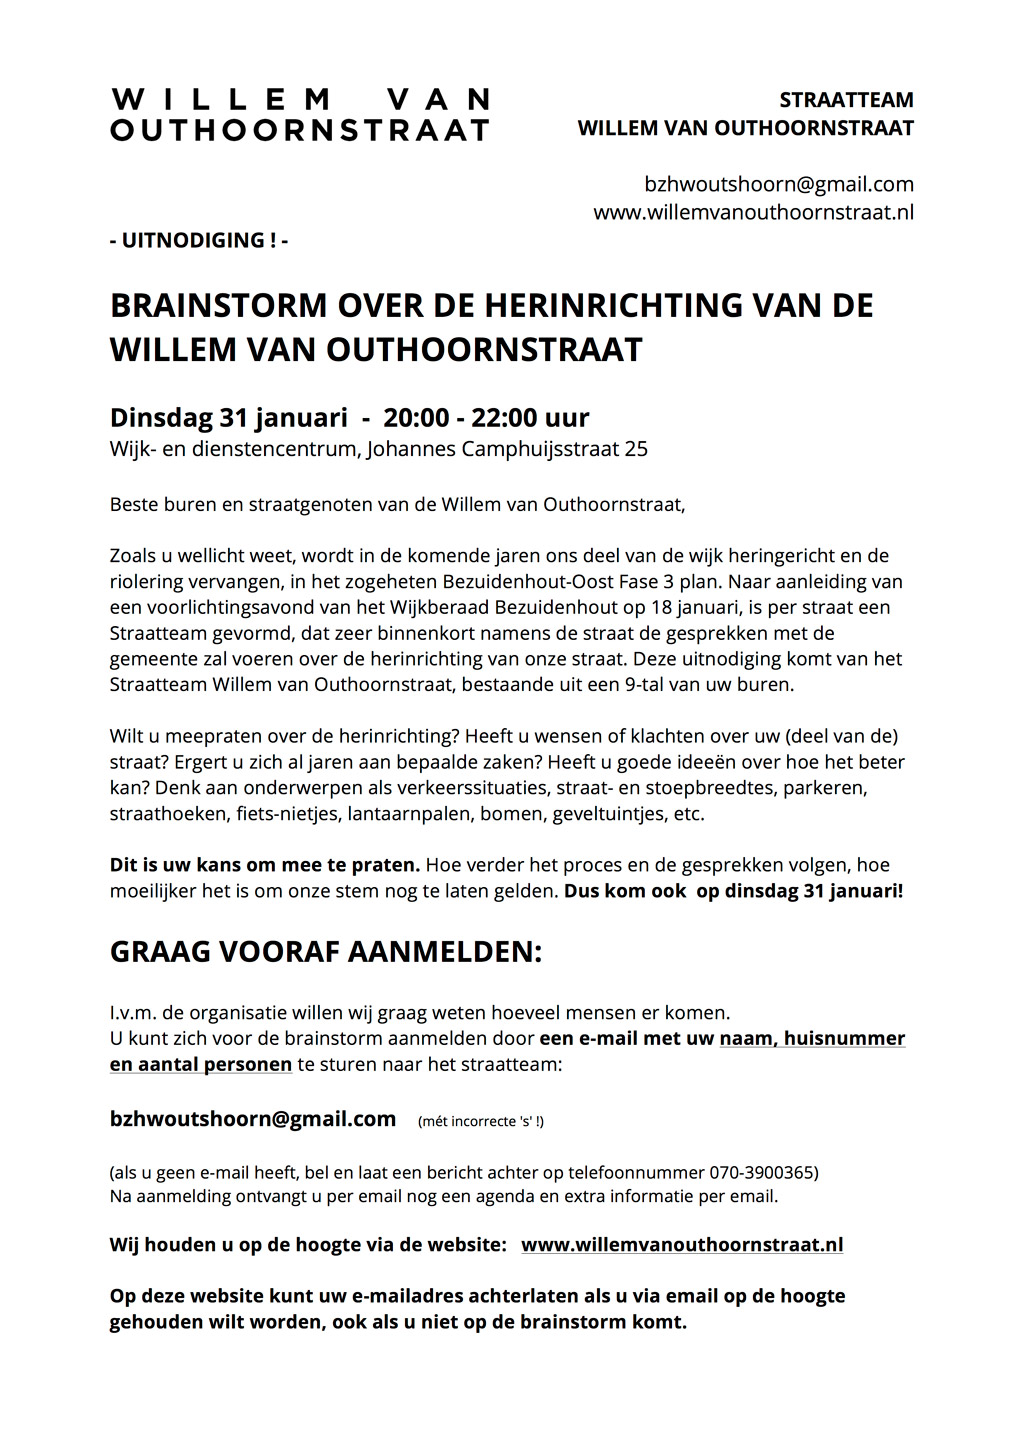 Flyer uitnodiging brainstorm Willem van Outhoornstraat 31 januari 2017